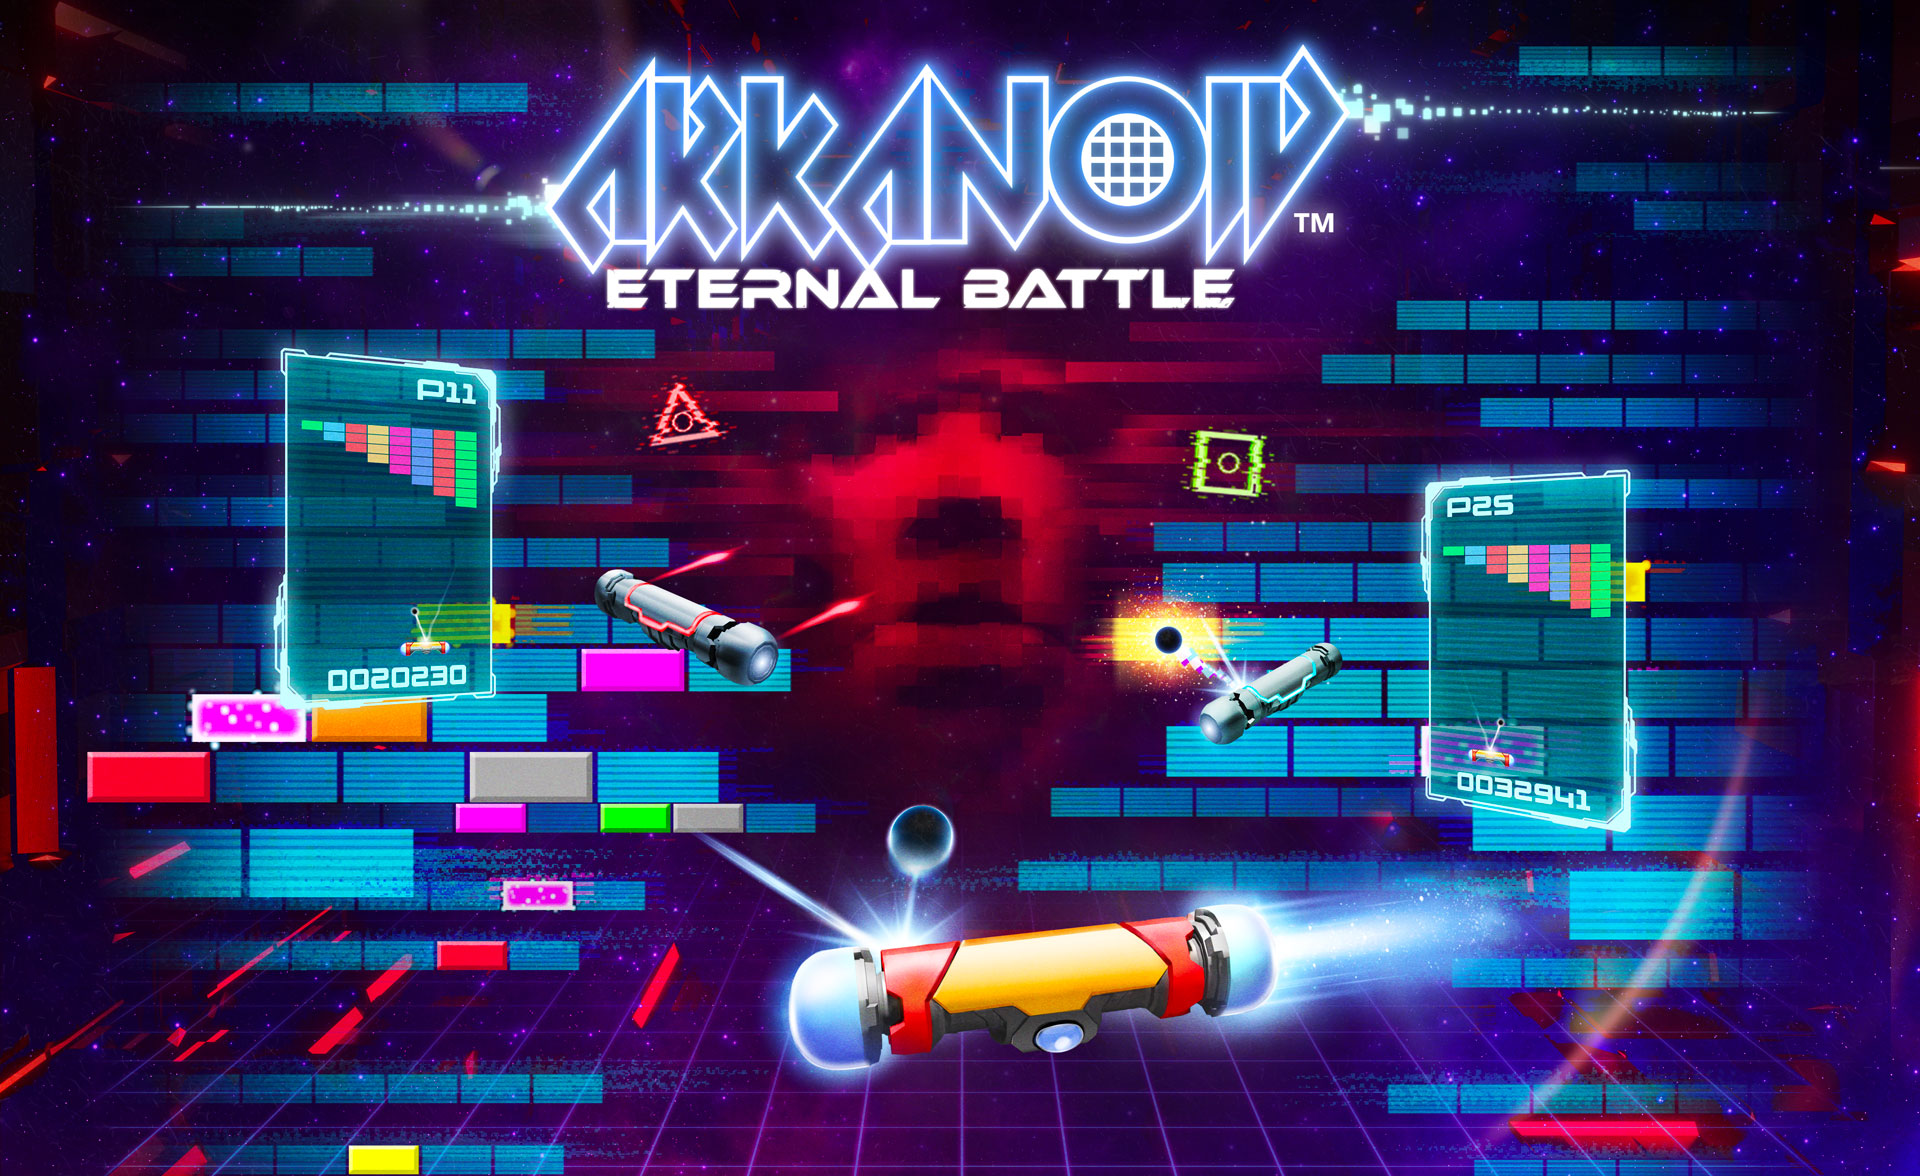 Arkanoid Eternal Battle